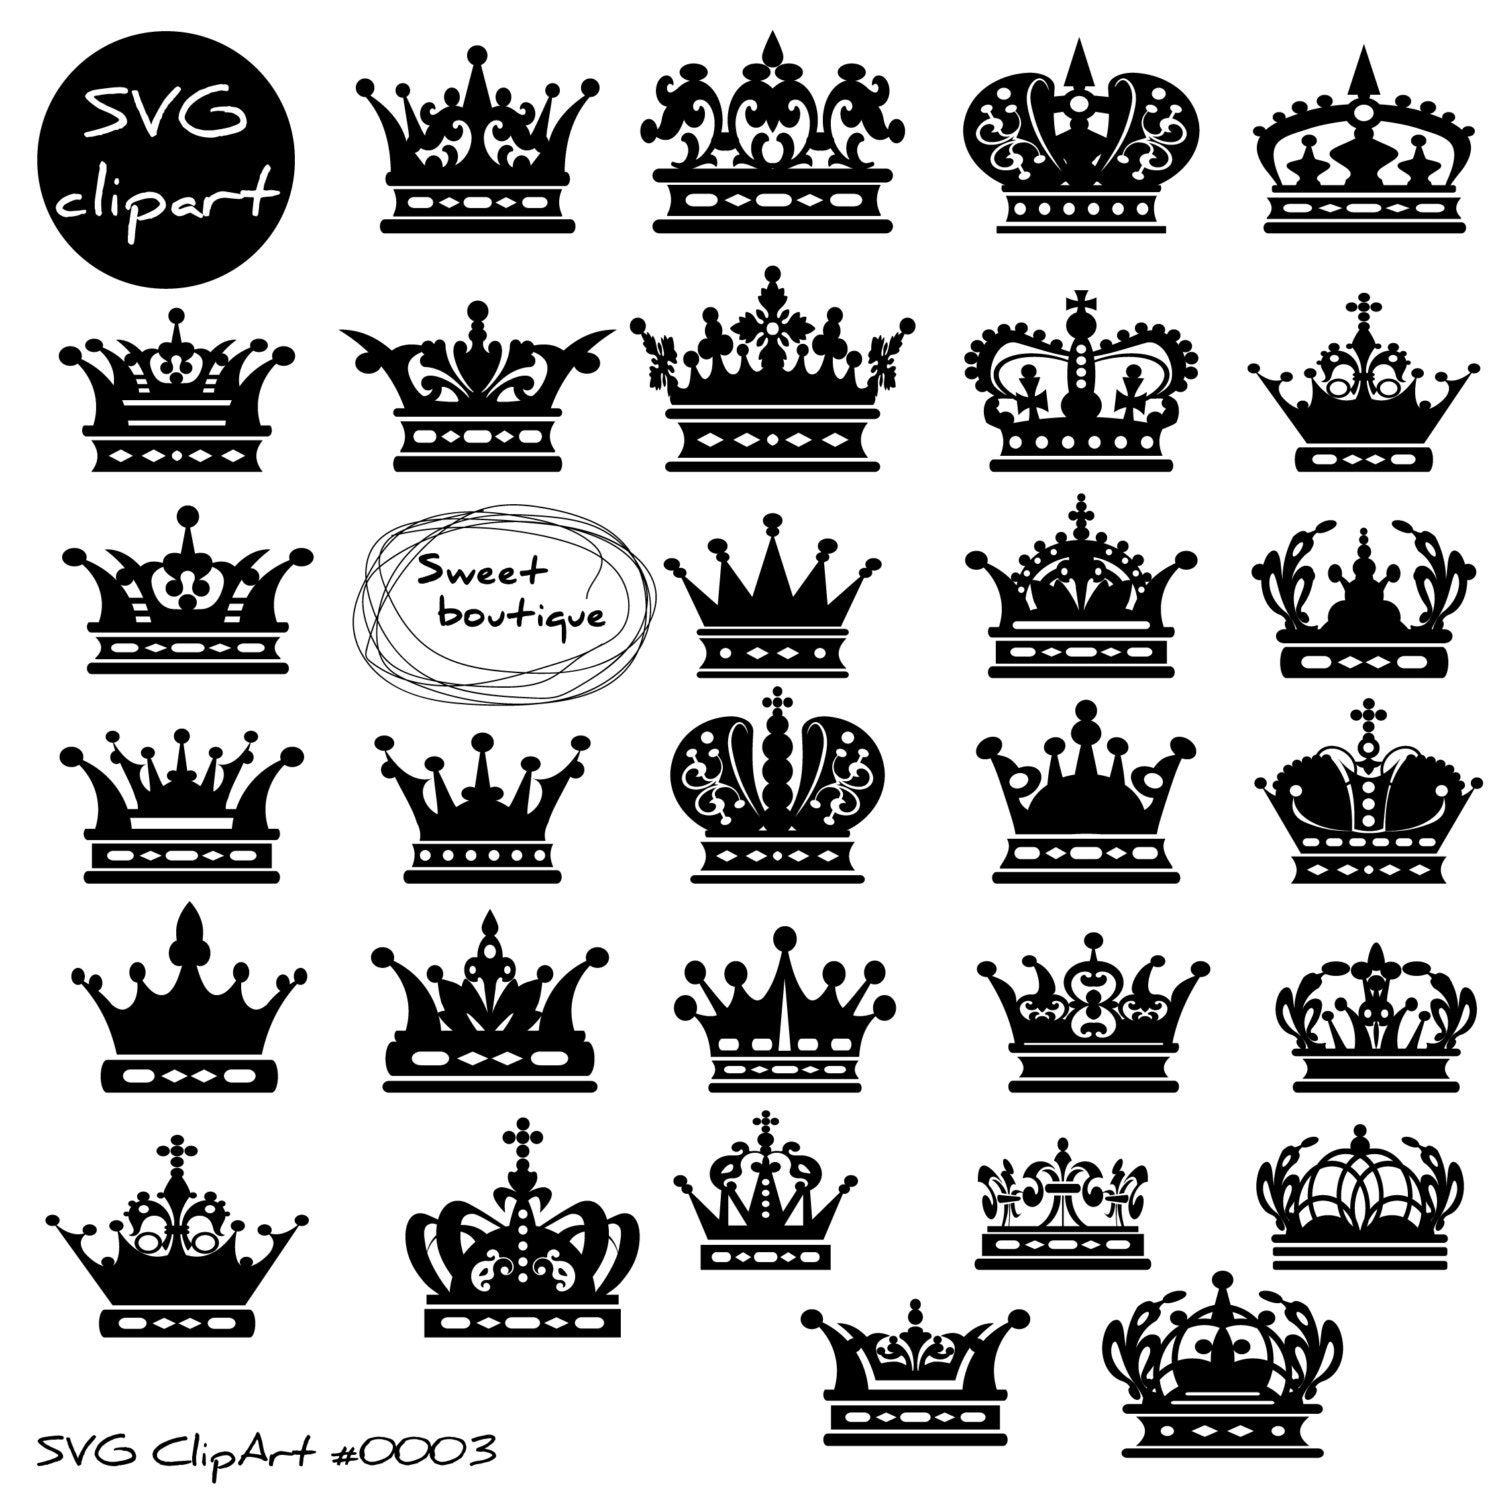 Download SVG Silhouette Crowns Digital Clip Art Crown Clipart Royal